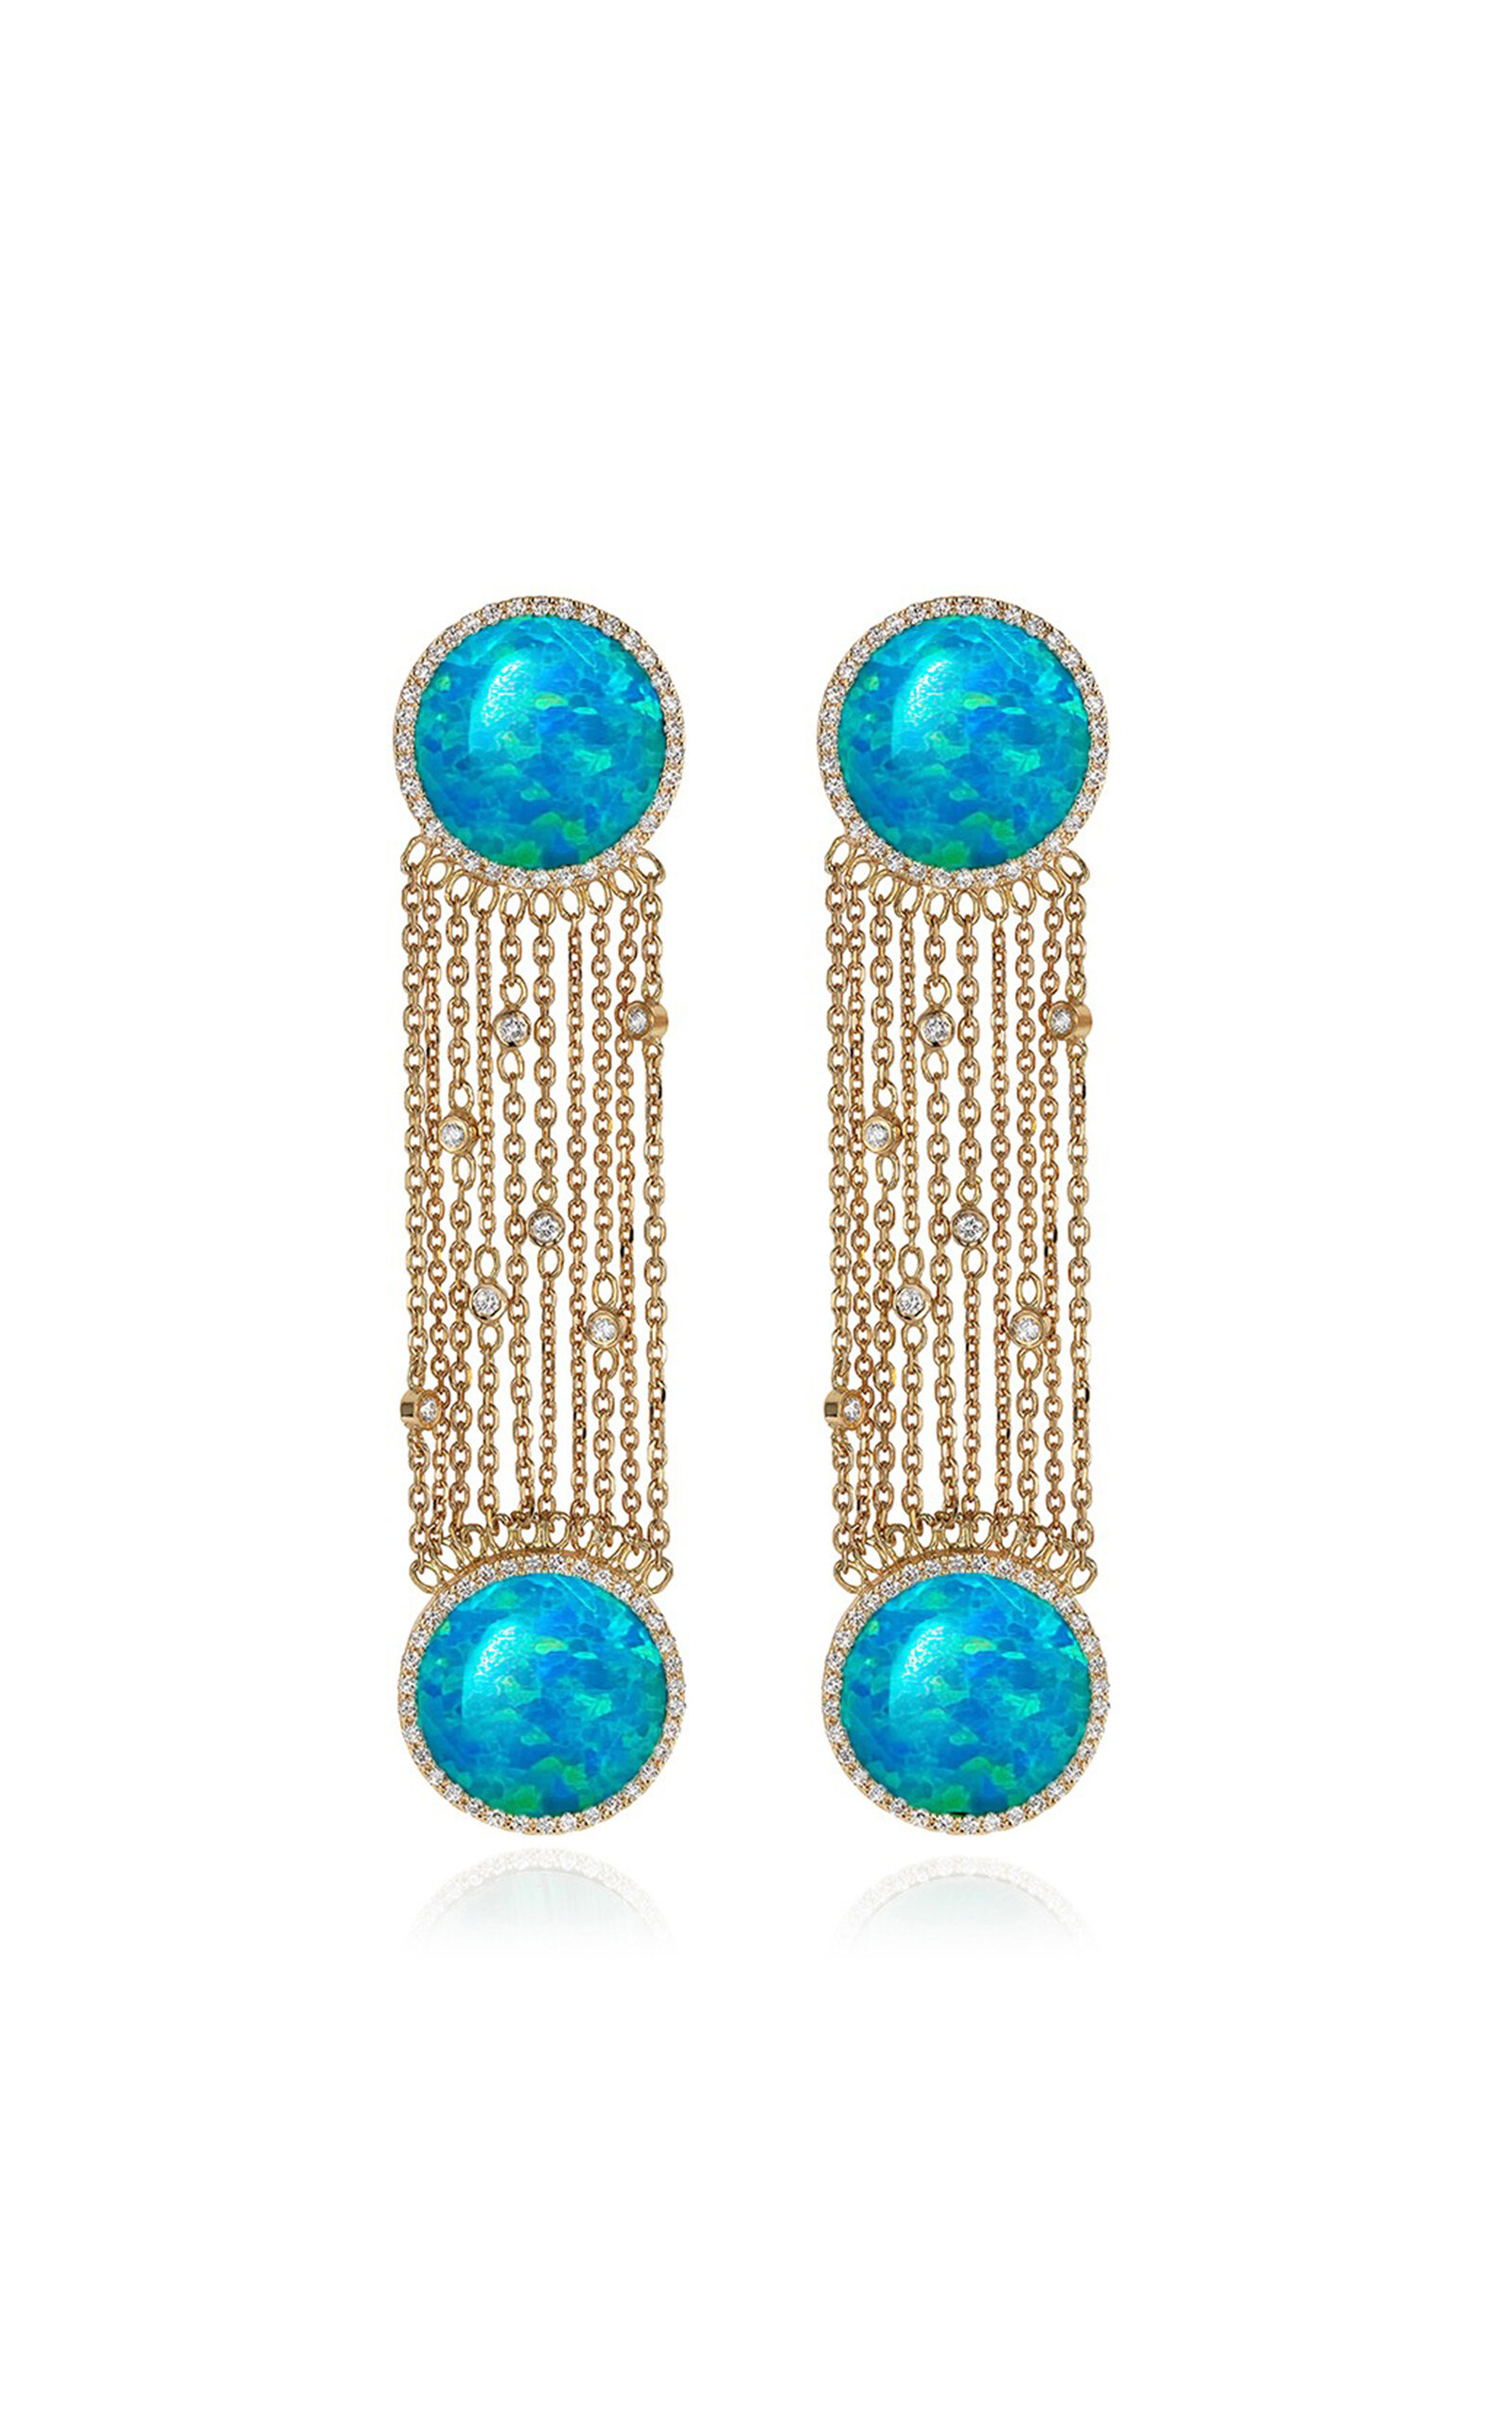 Ready 2 Discover 18K Yellow Gold Opal Earrings